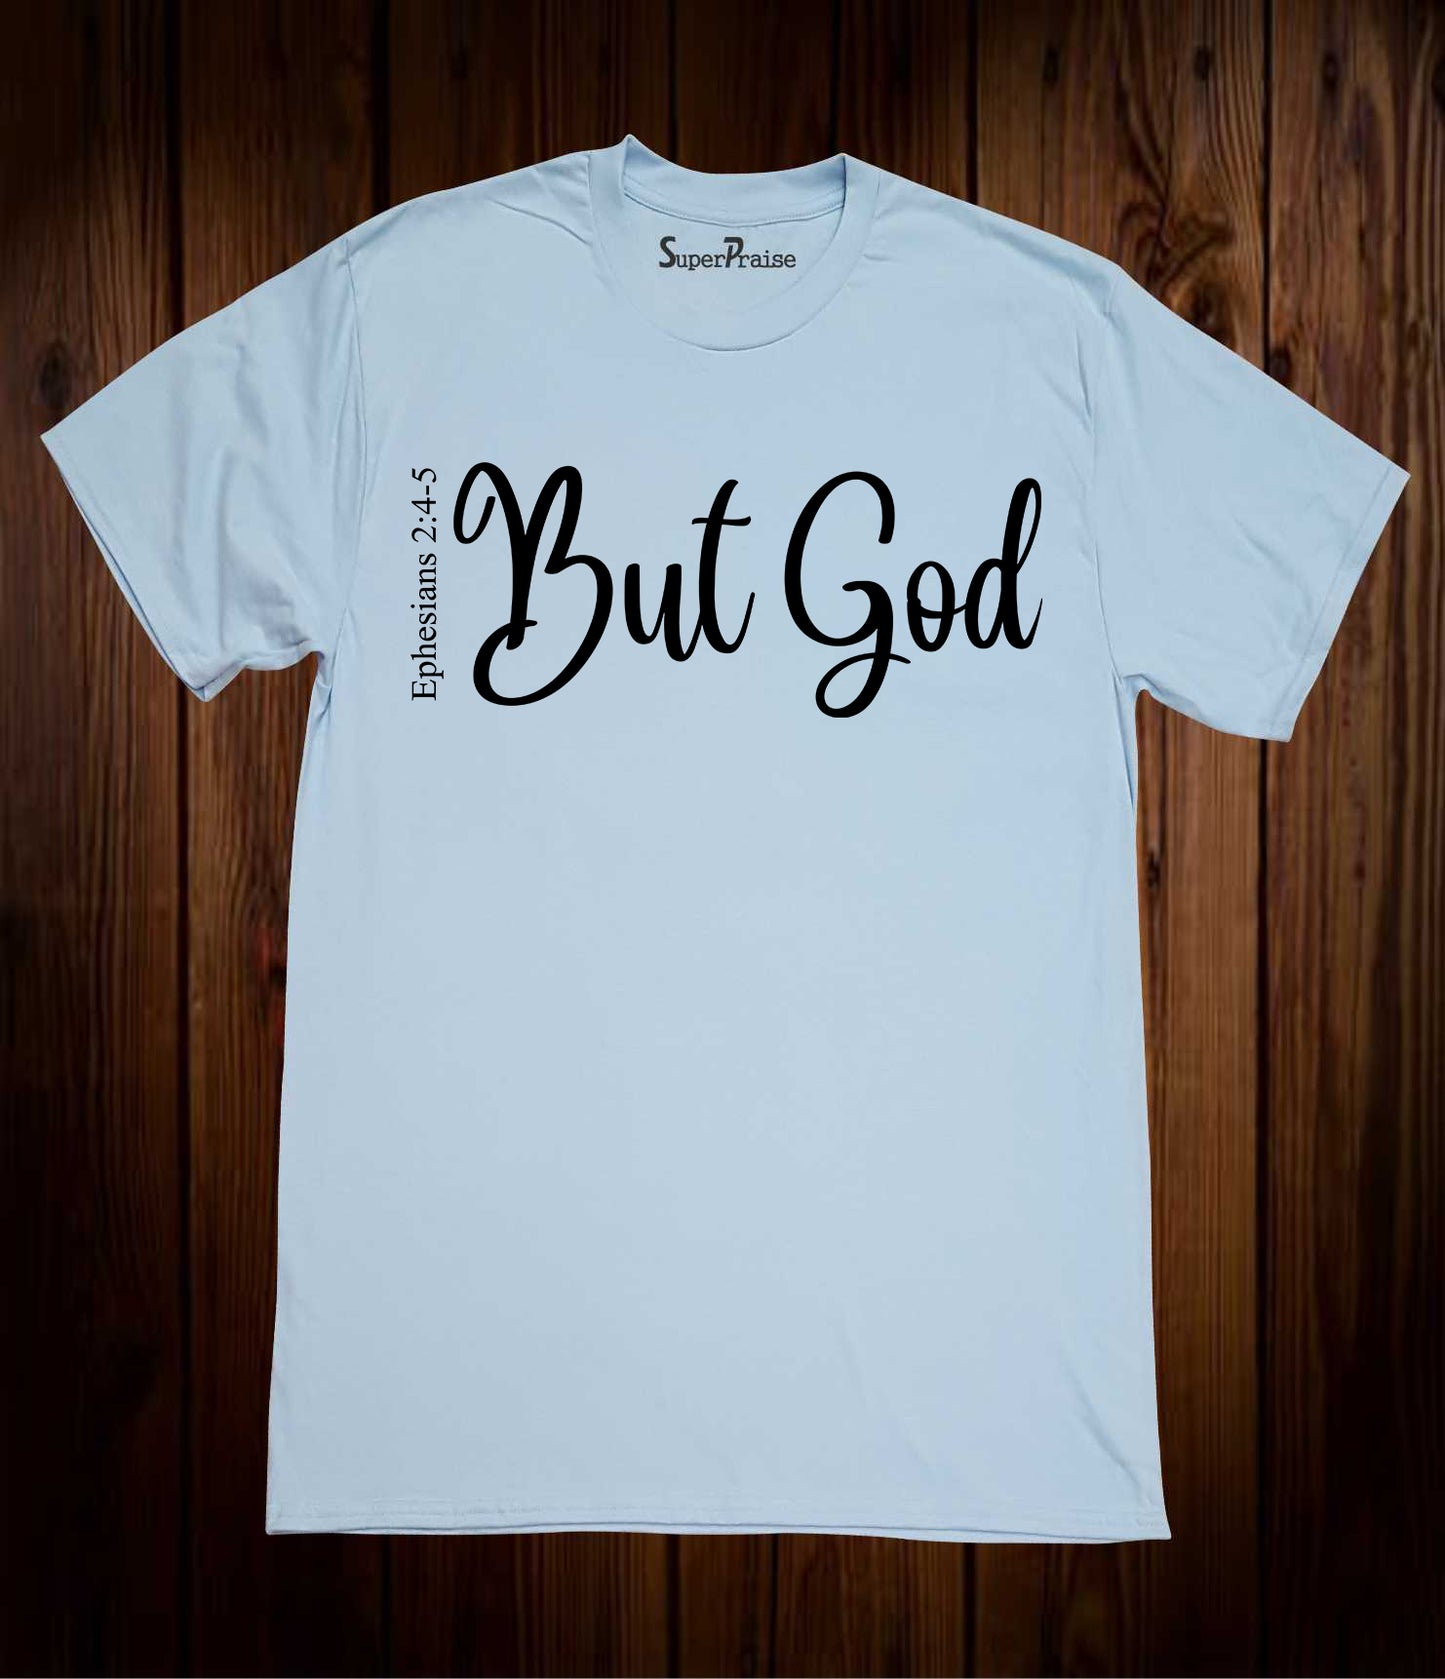 But God Ephesians 2:4-5 Verse T Shirt